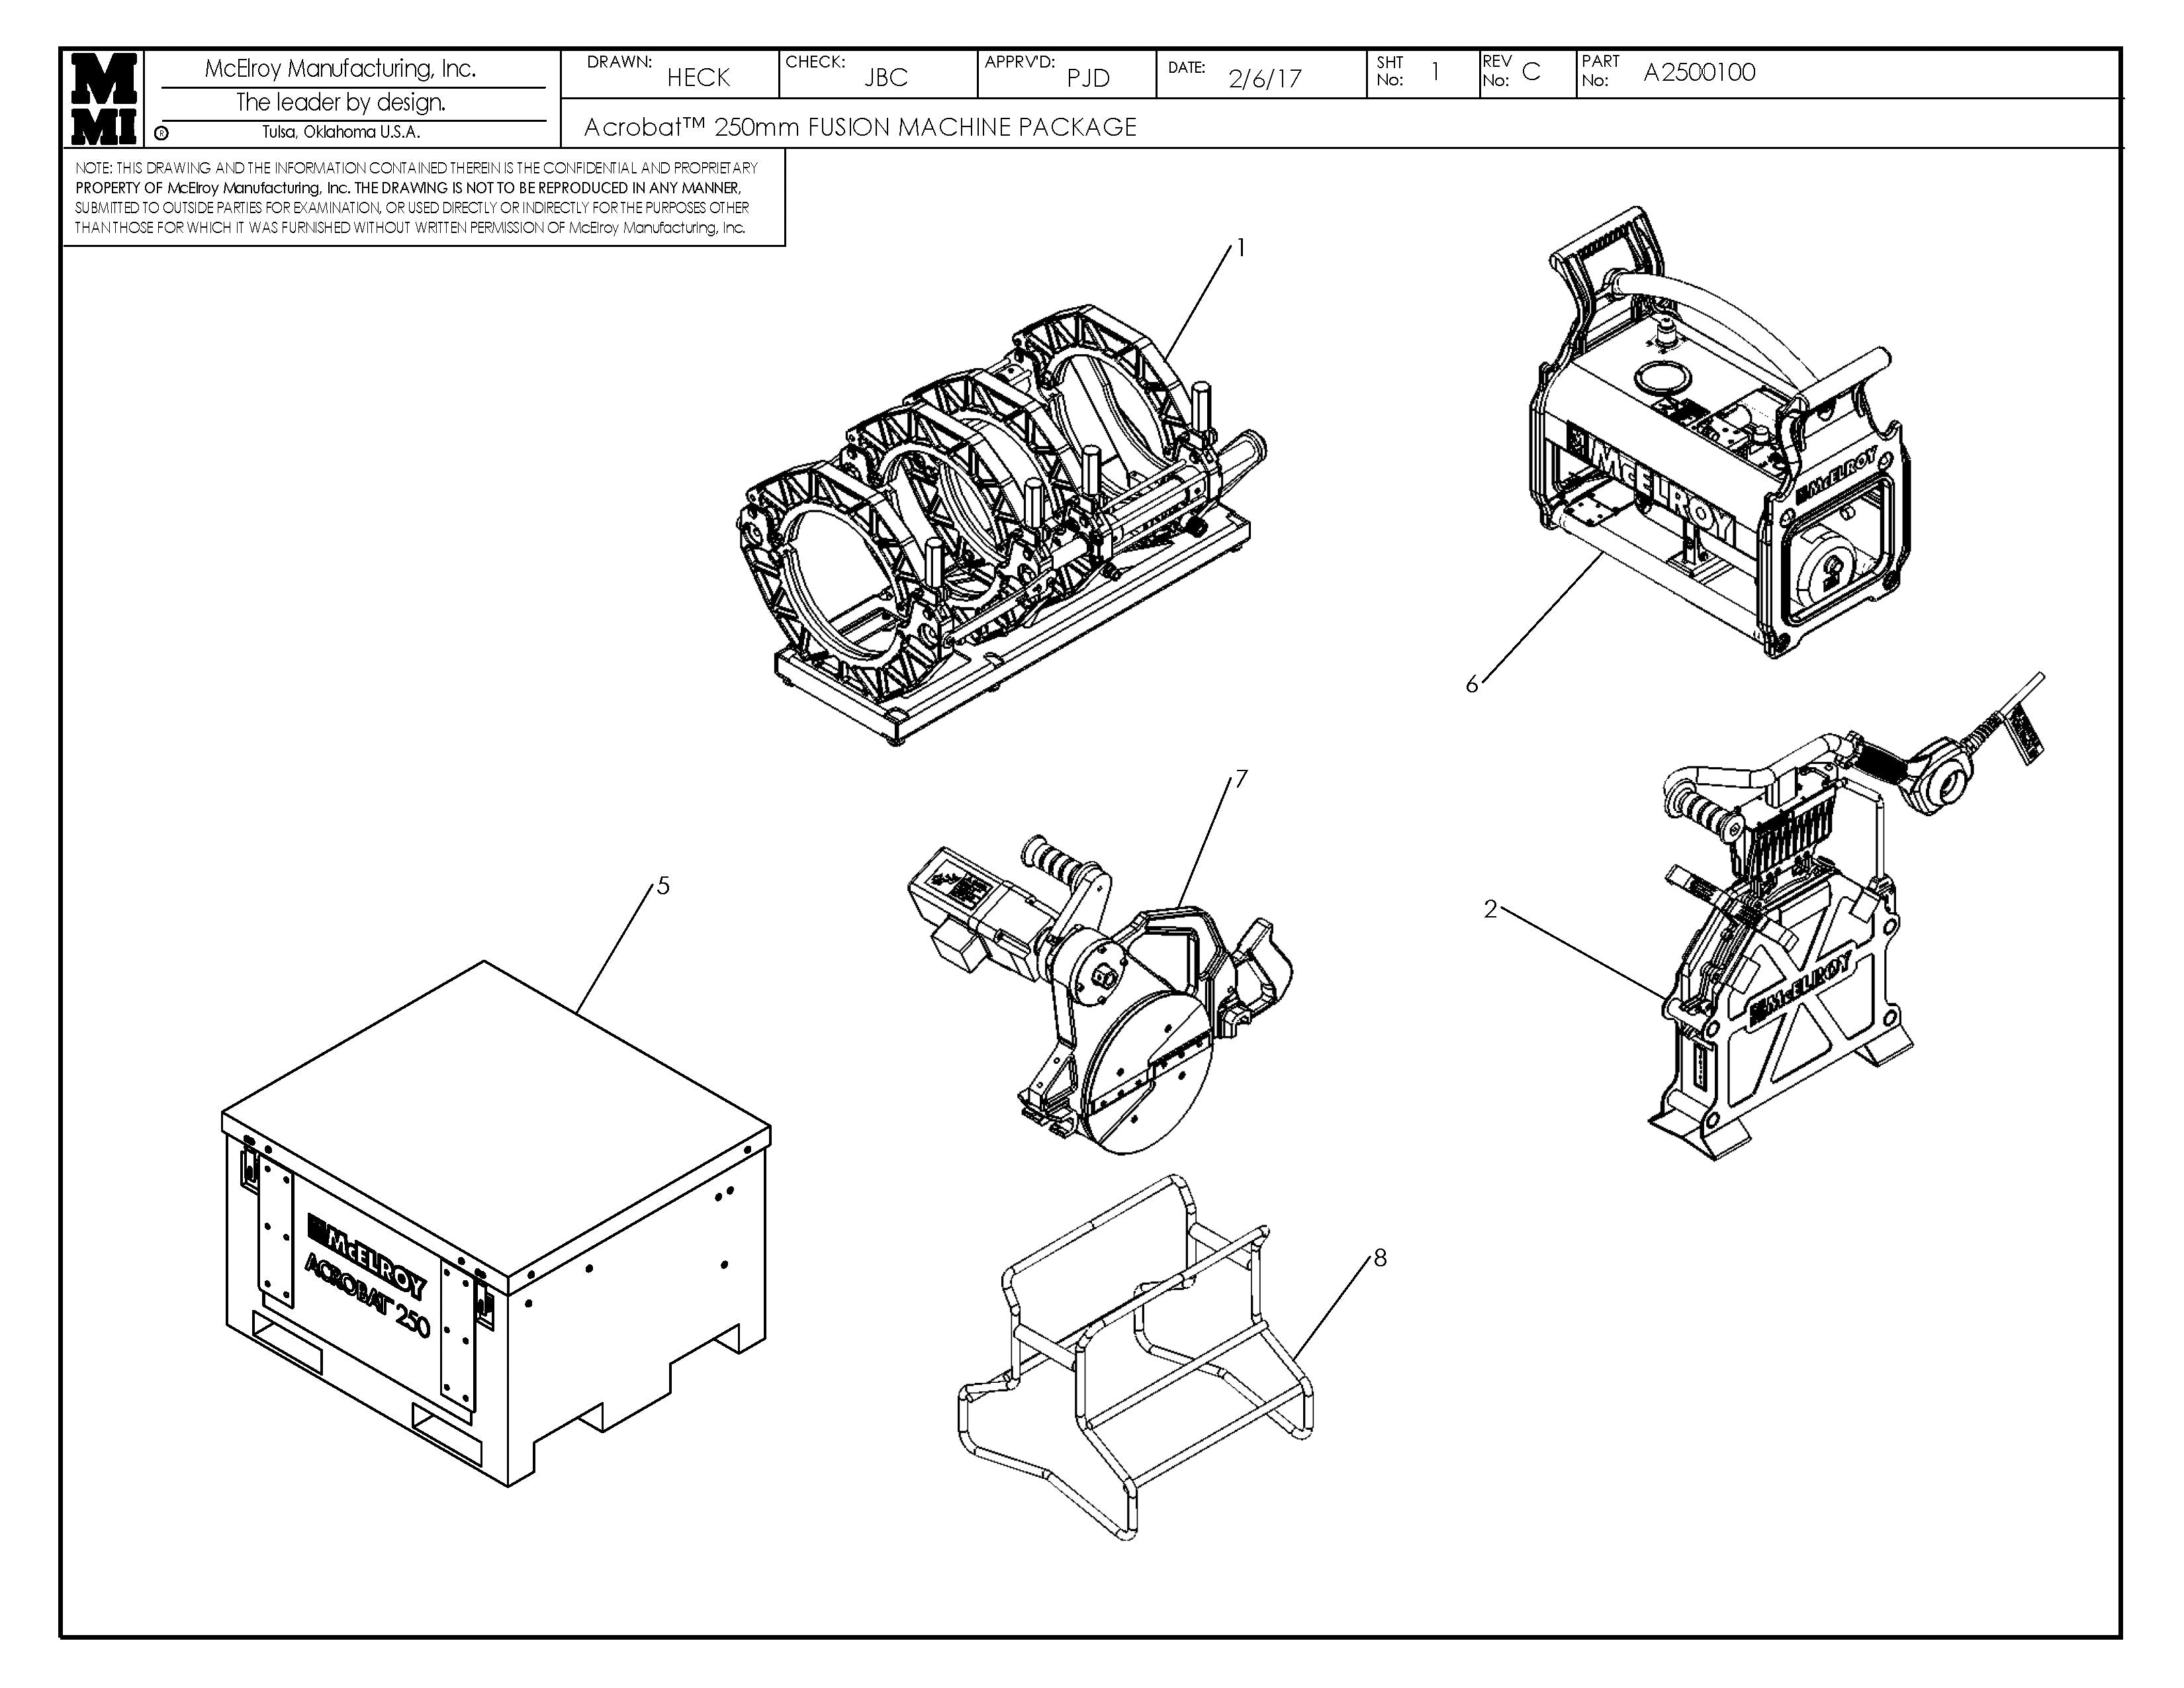 Ac Hf 120 Fusion Machine Package W/Dm Hpu&W/O